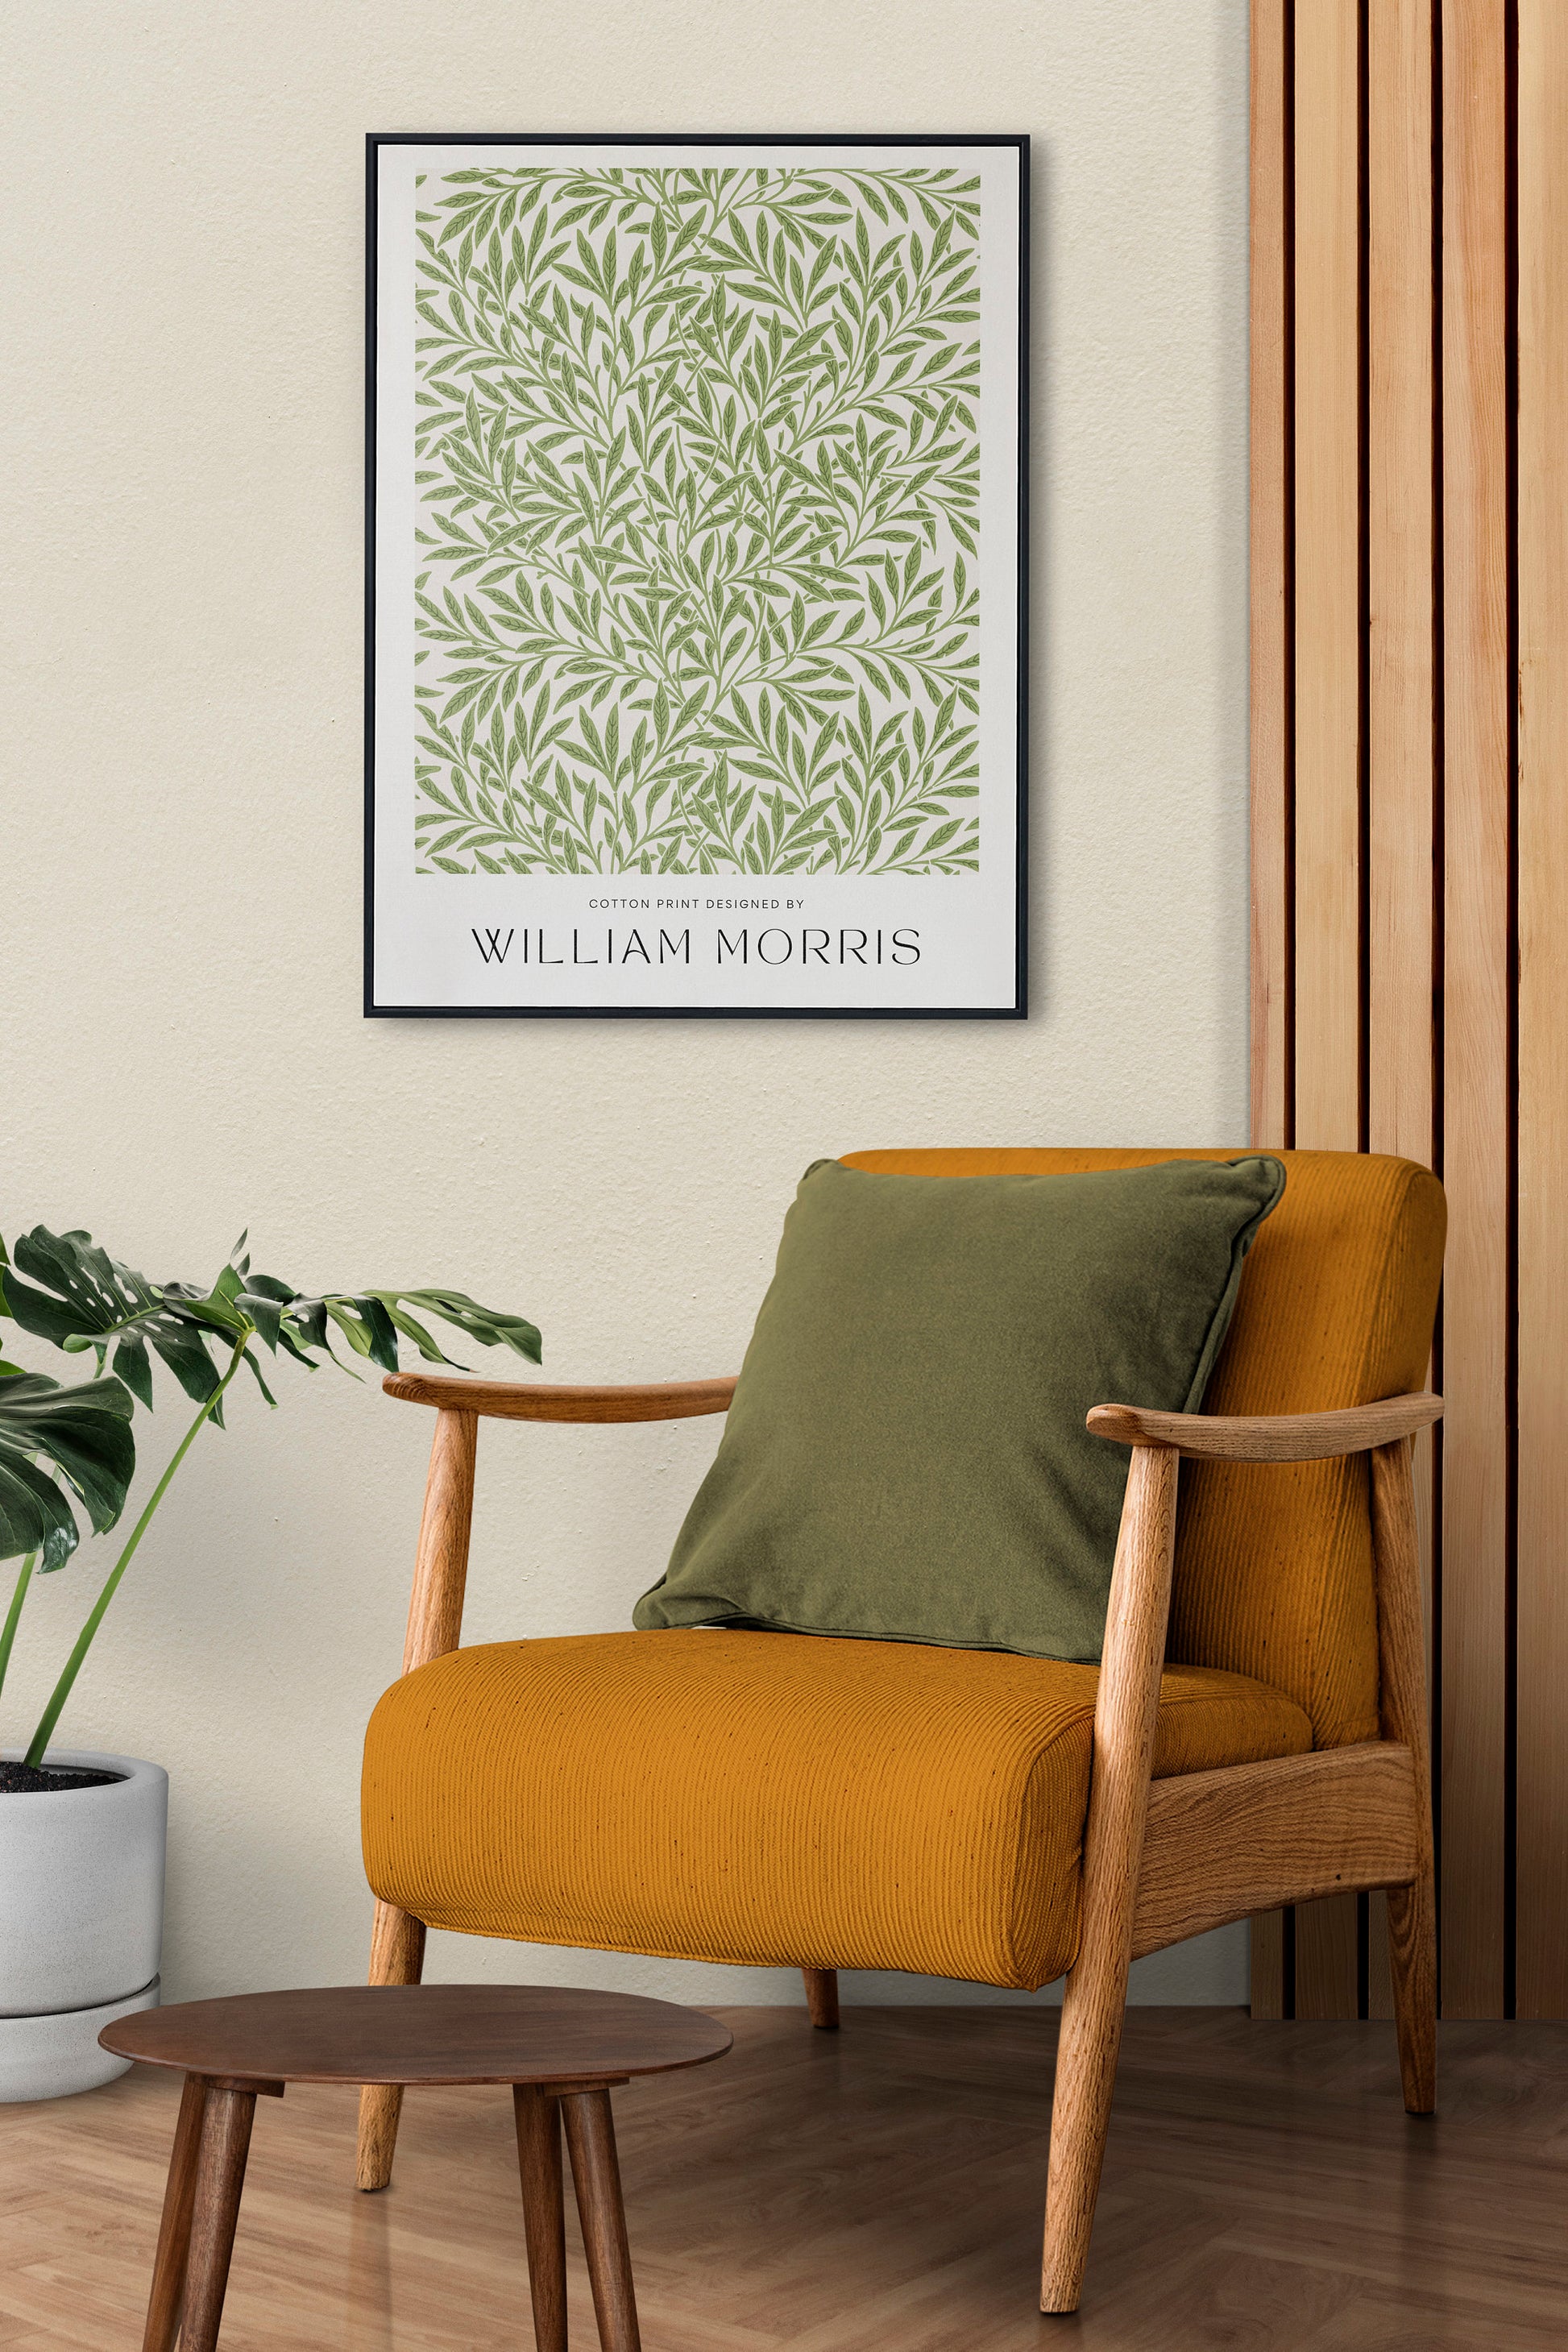 William Morris Art Print, Botanical print, William Morris Willow Pattern, Art Poster, Museum Poster, Vintage Poster, Wall Decor, Home Decor